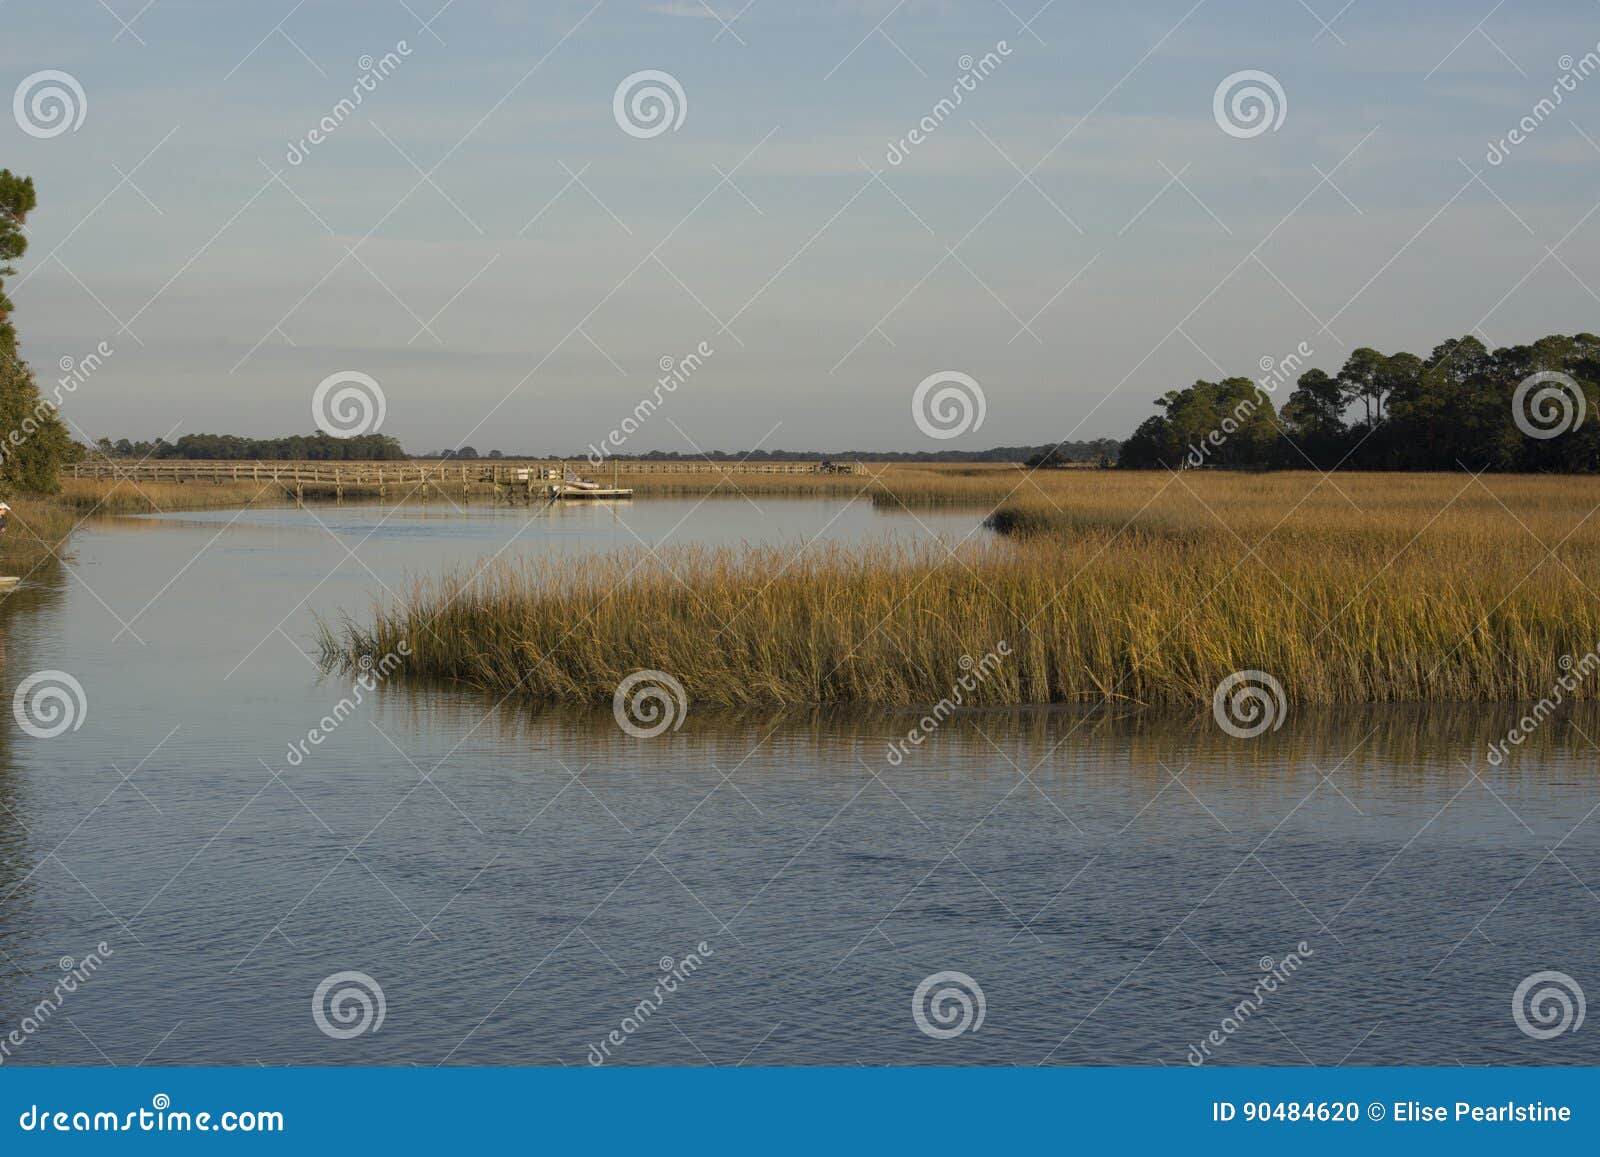 south carolina marsh